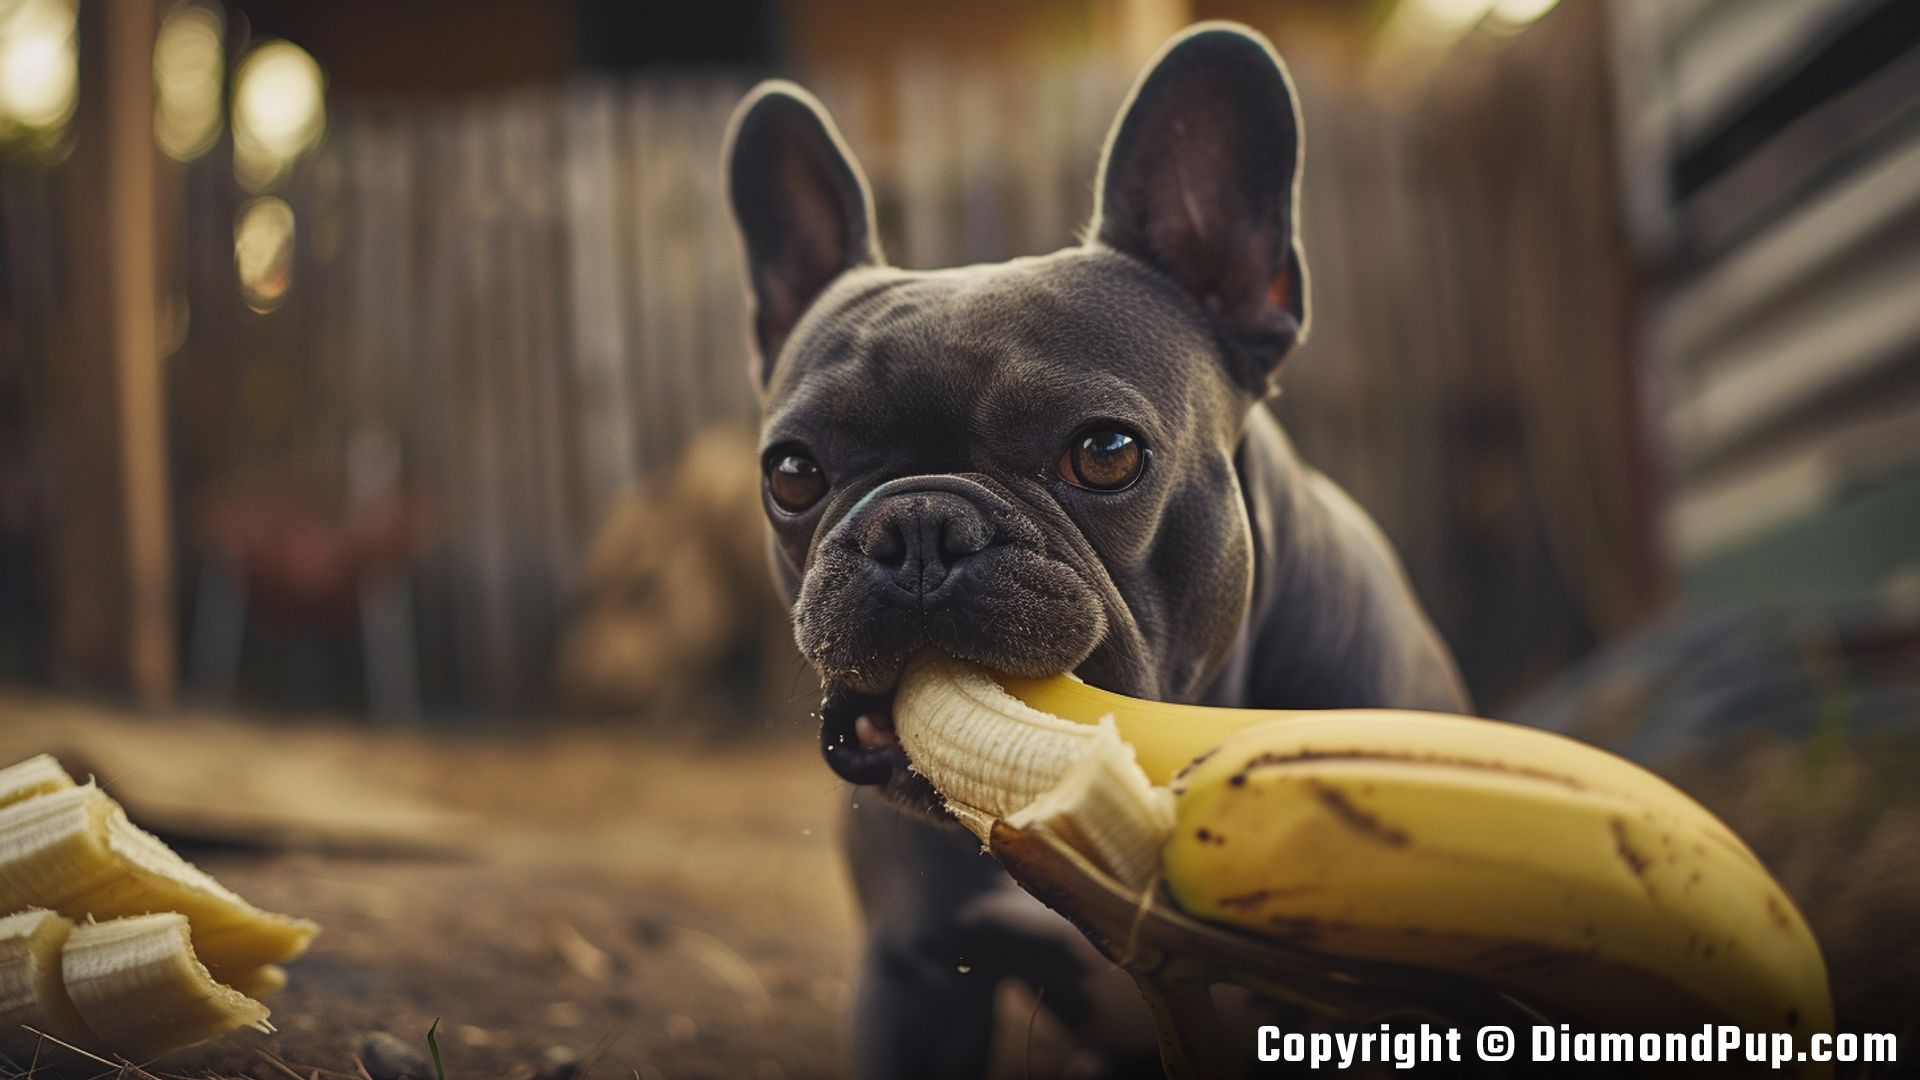 Photograph of a Playful French Bulldog Eating Banana